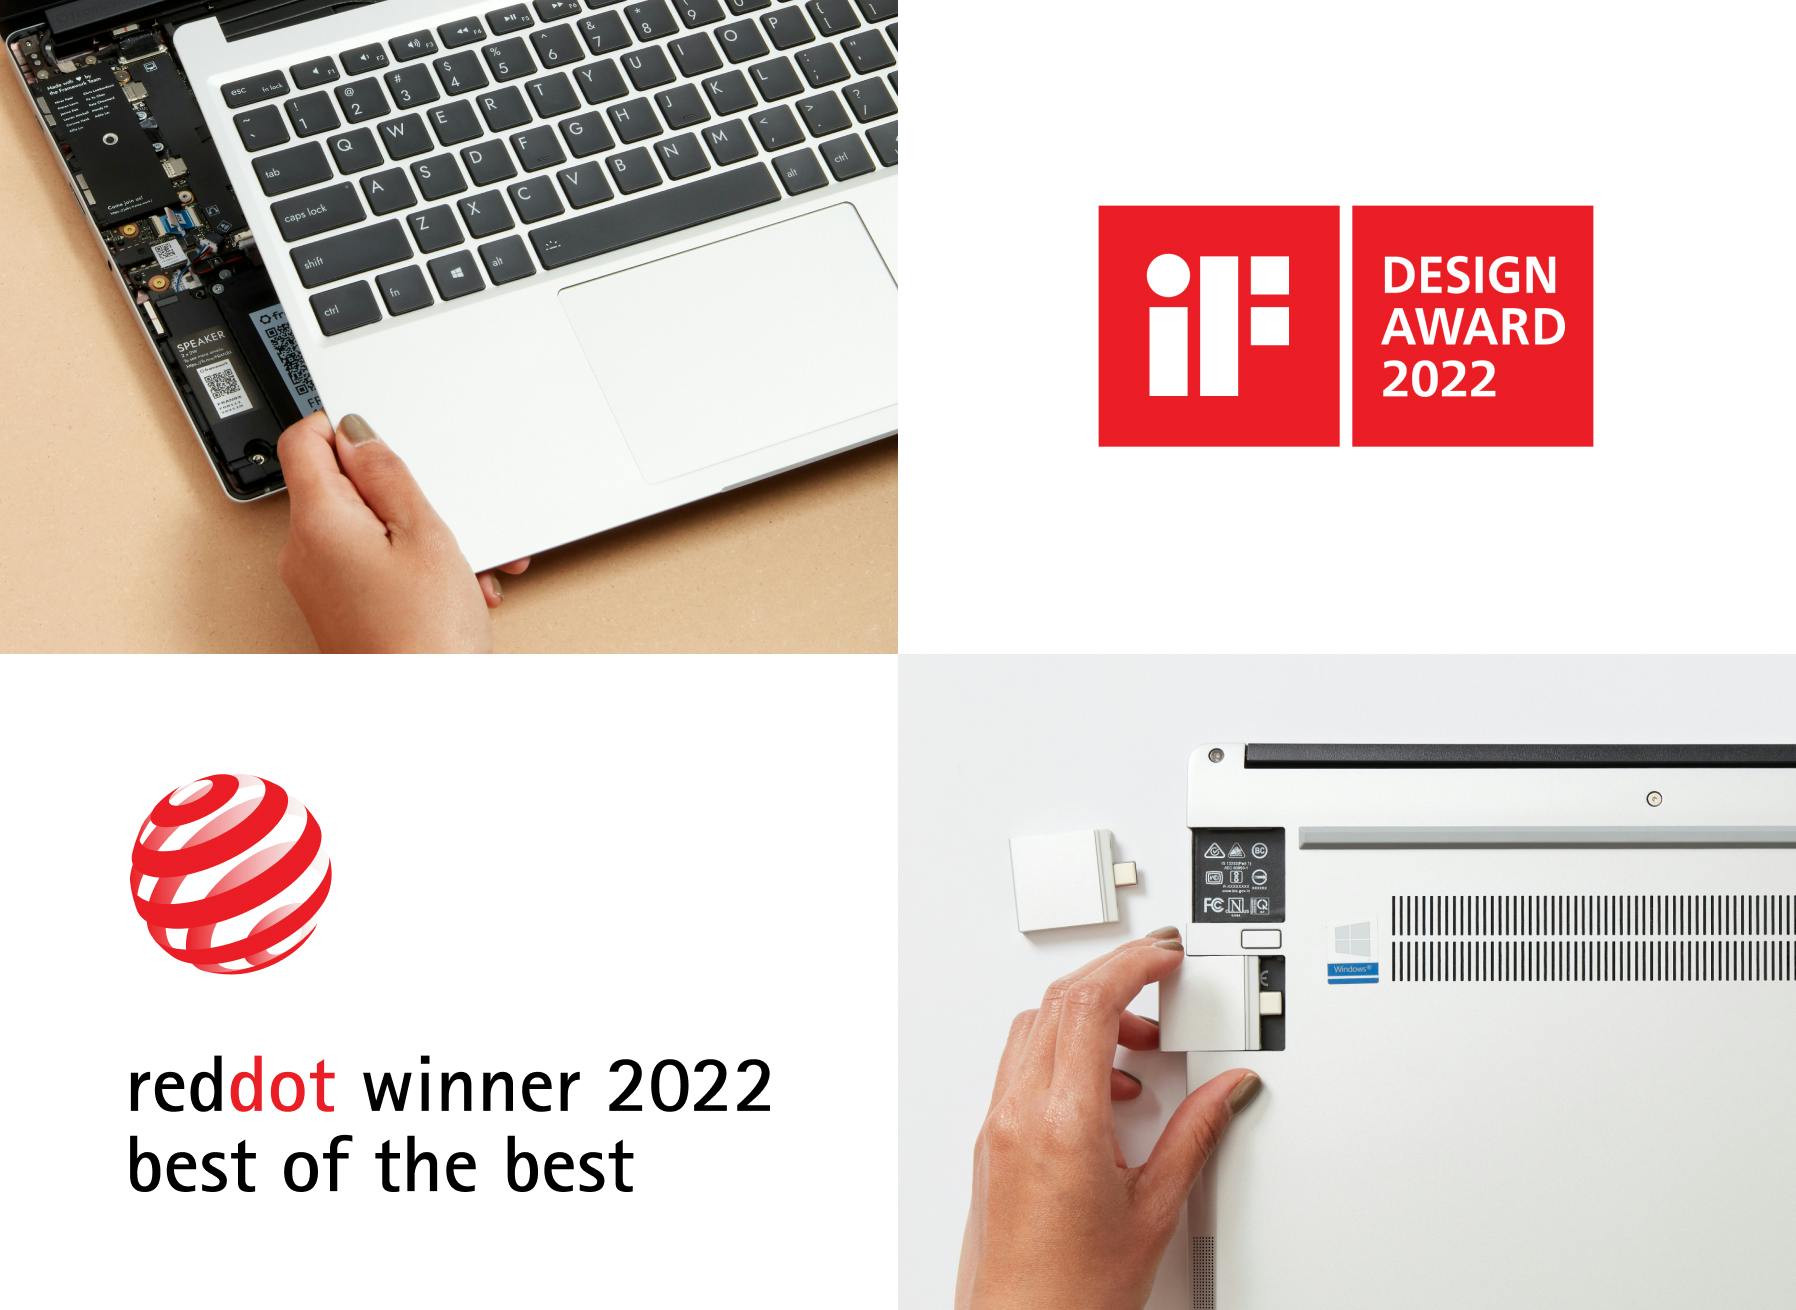 Framework Laptop with Red Dot Winner Logo and iF Design Award 2022